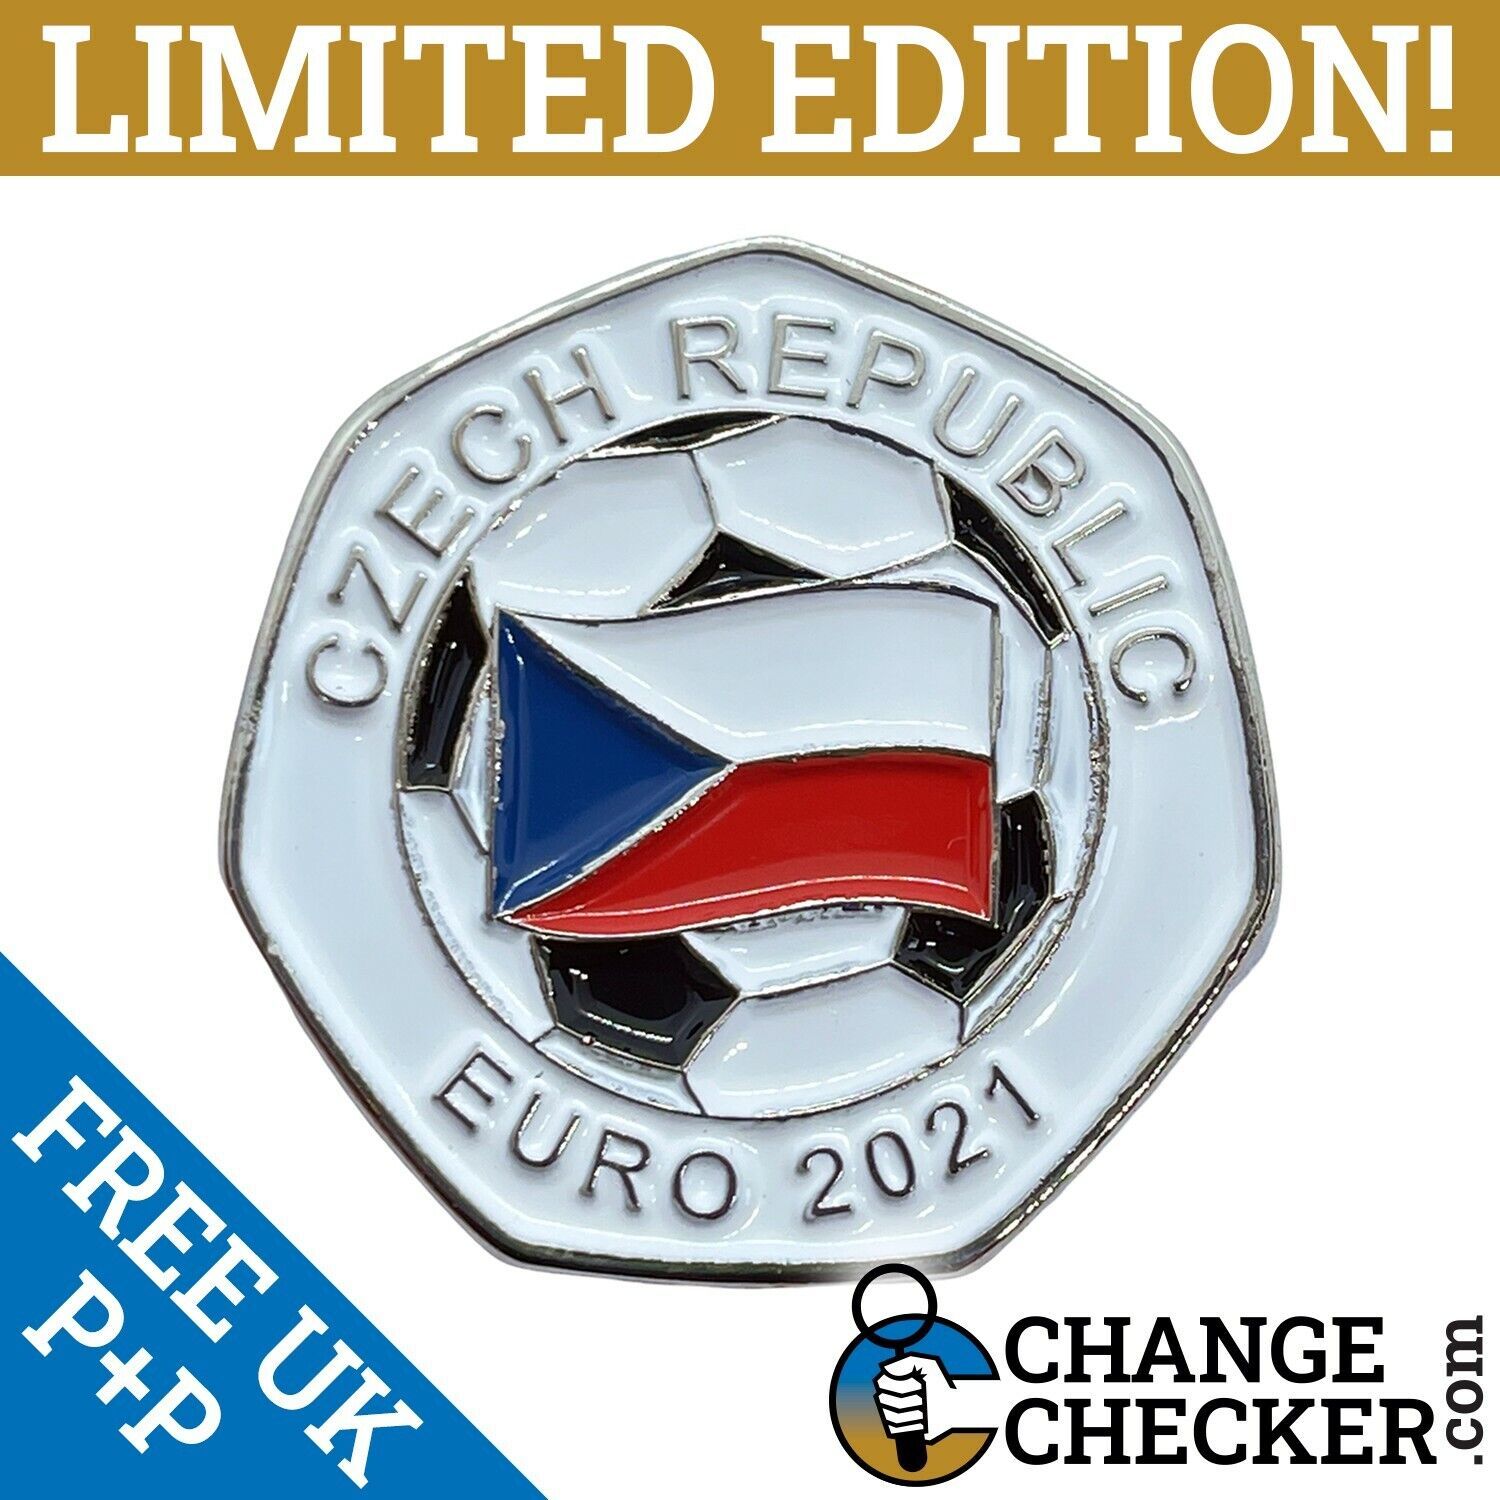 Czech Republic EURO 2021 Football 50p Shaped Coins